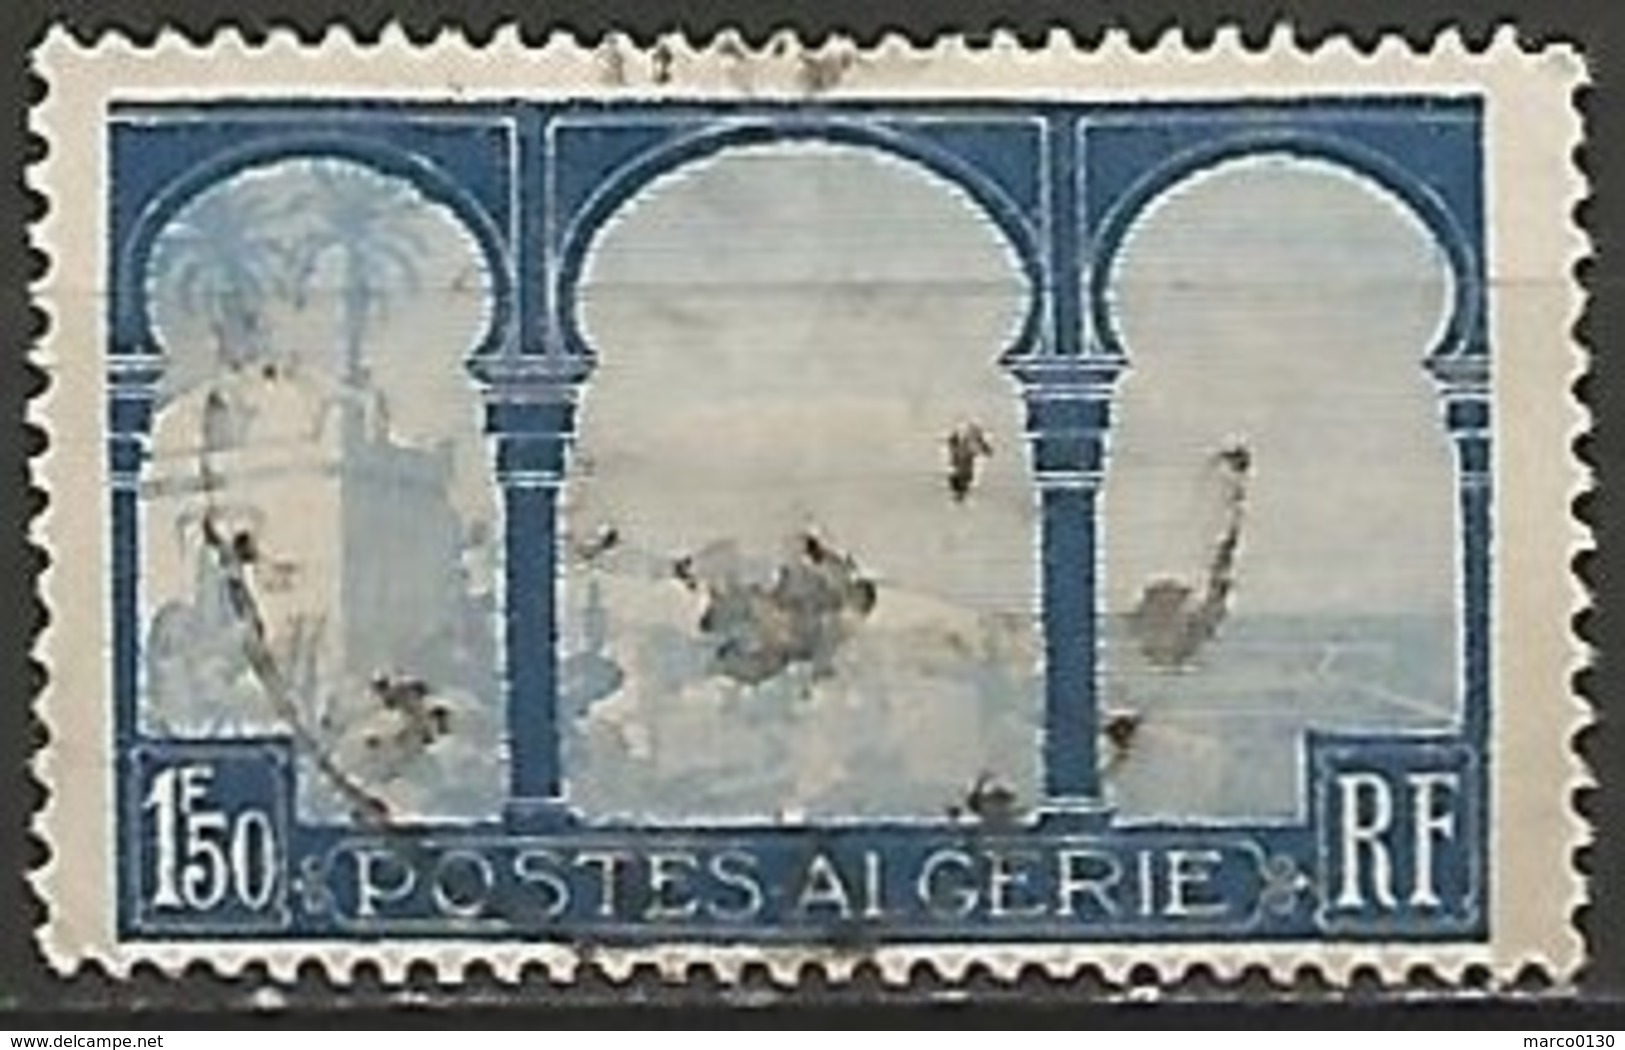 ALGERIE N° 83 OBLITERE - Used Stamps